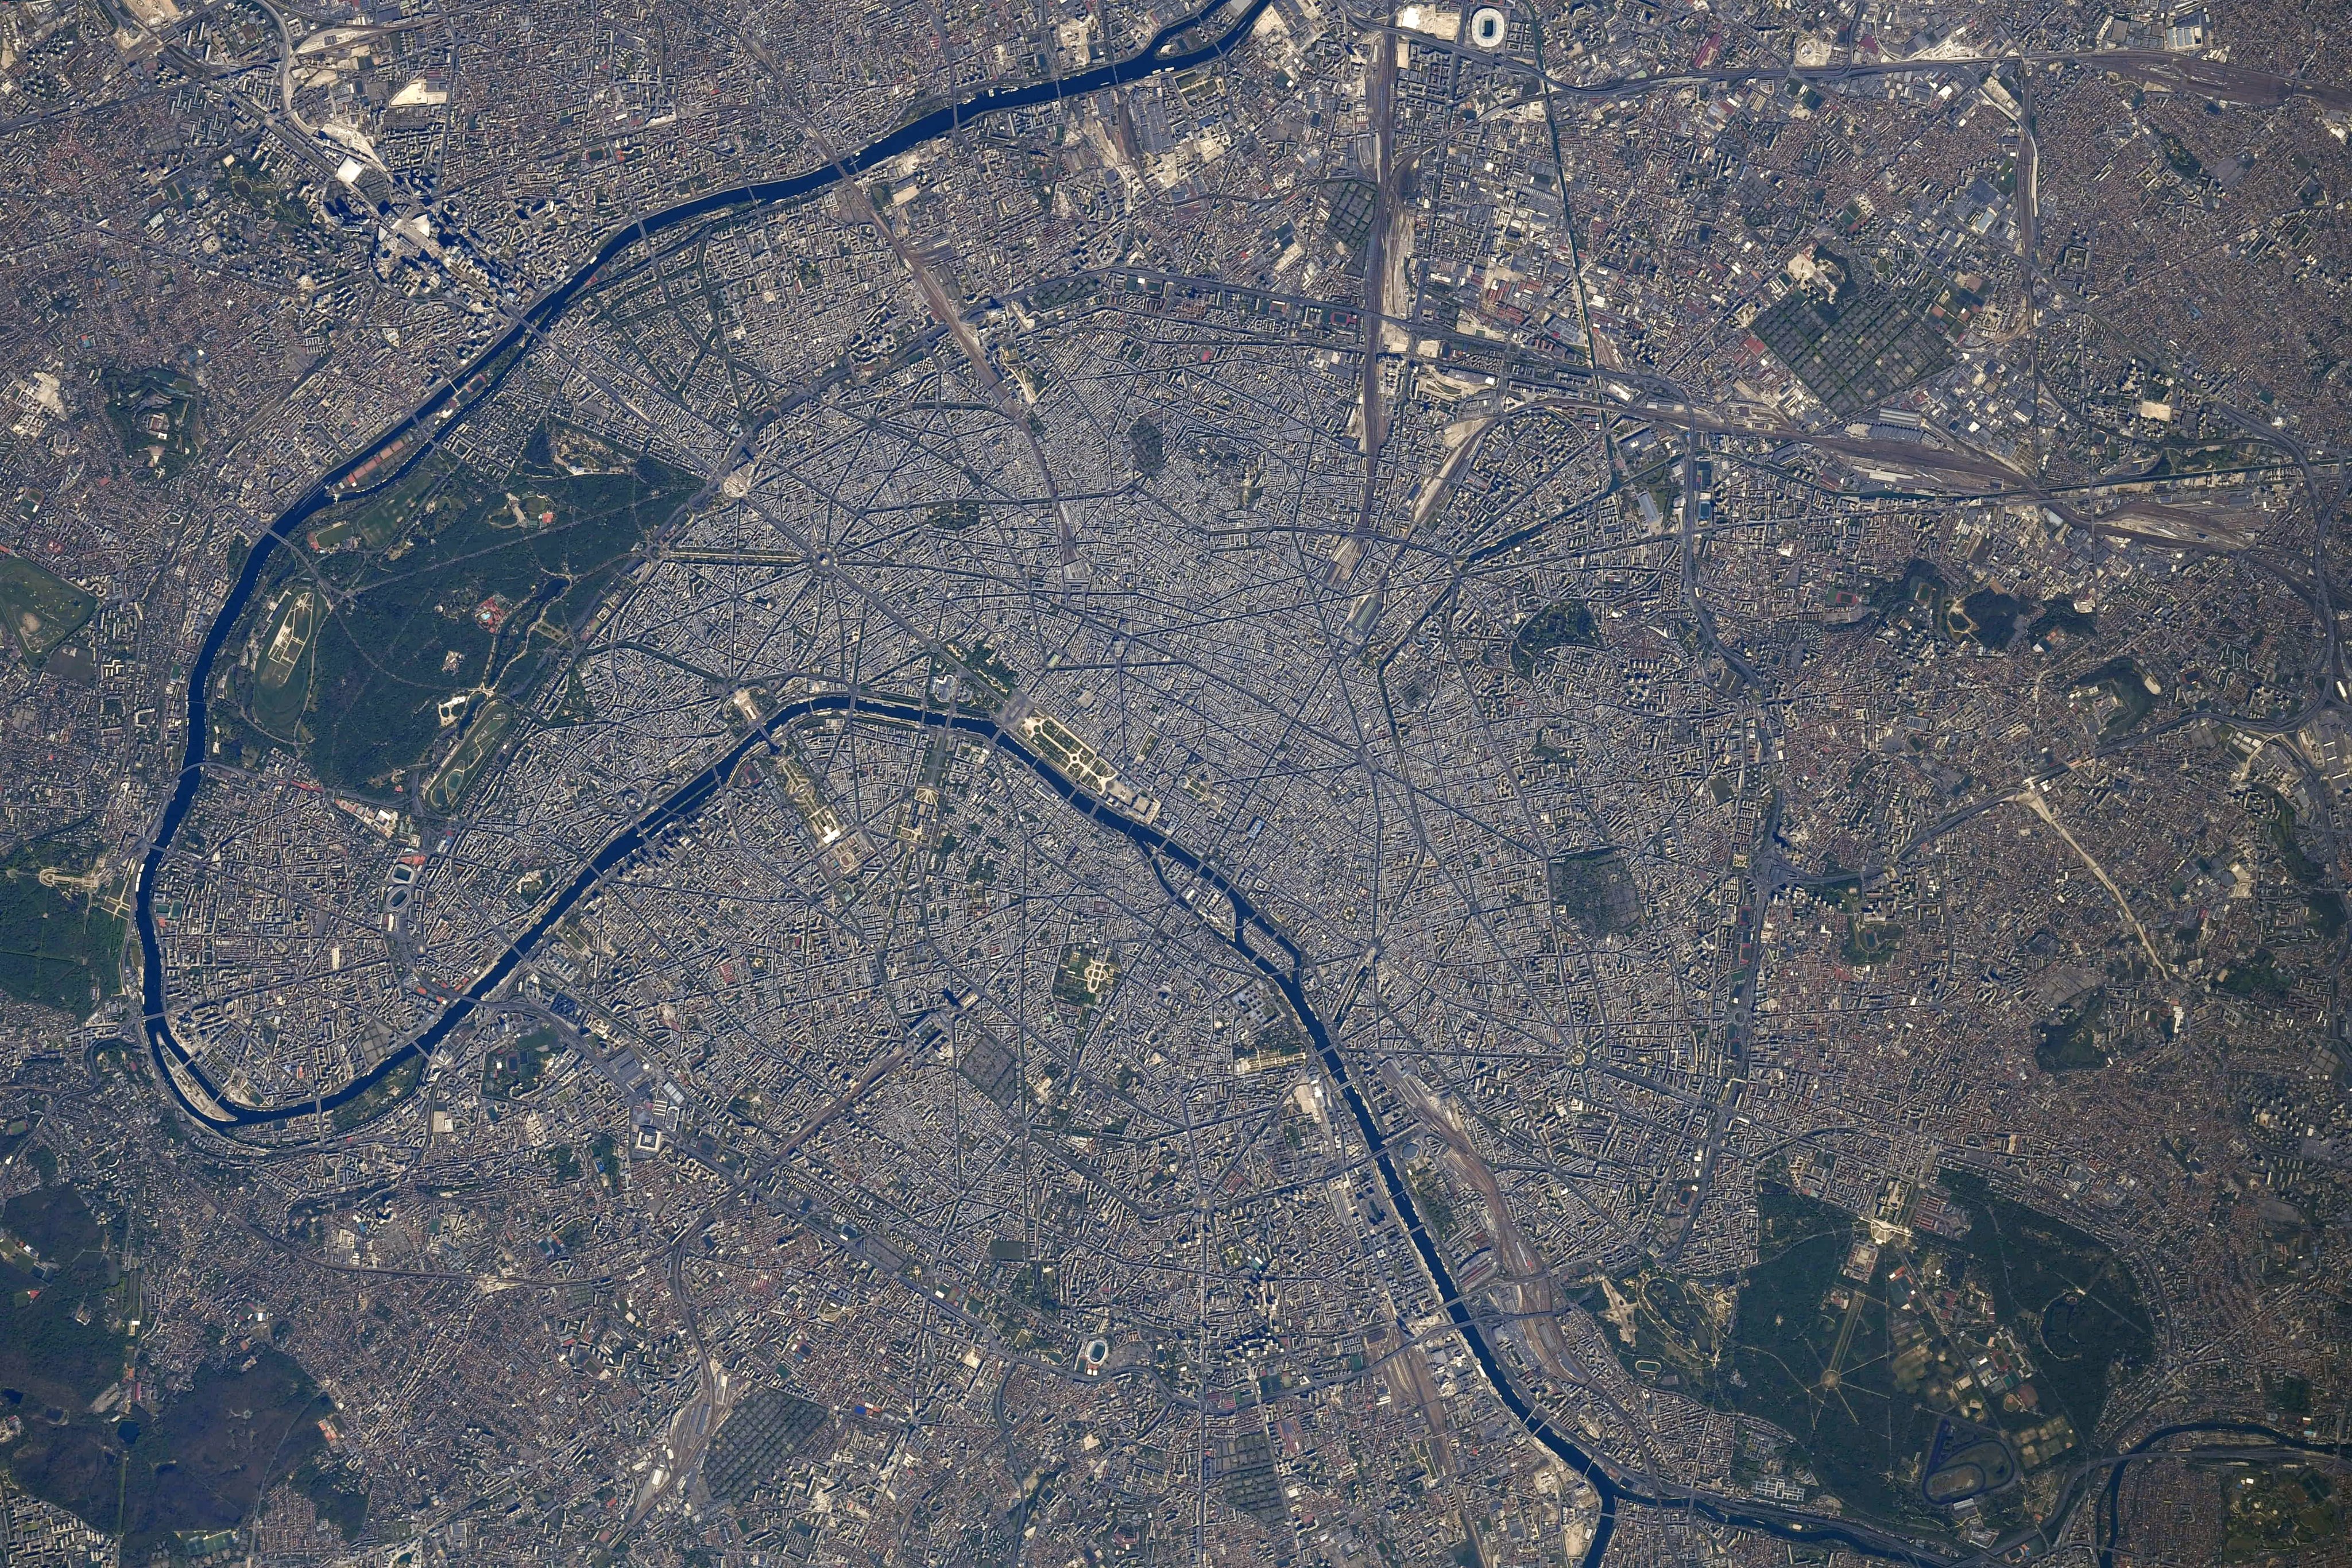 General 4096x2731 Paris satellite photo France urban city cityscape top view aerial view